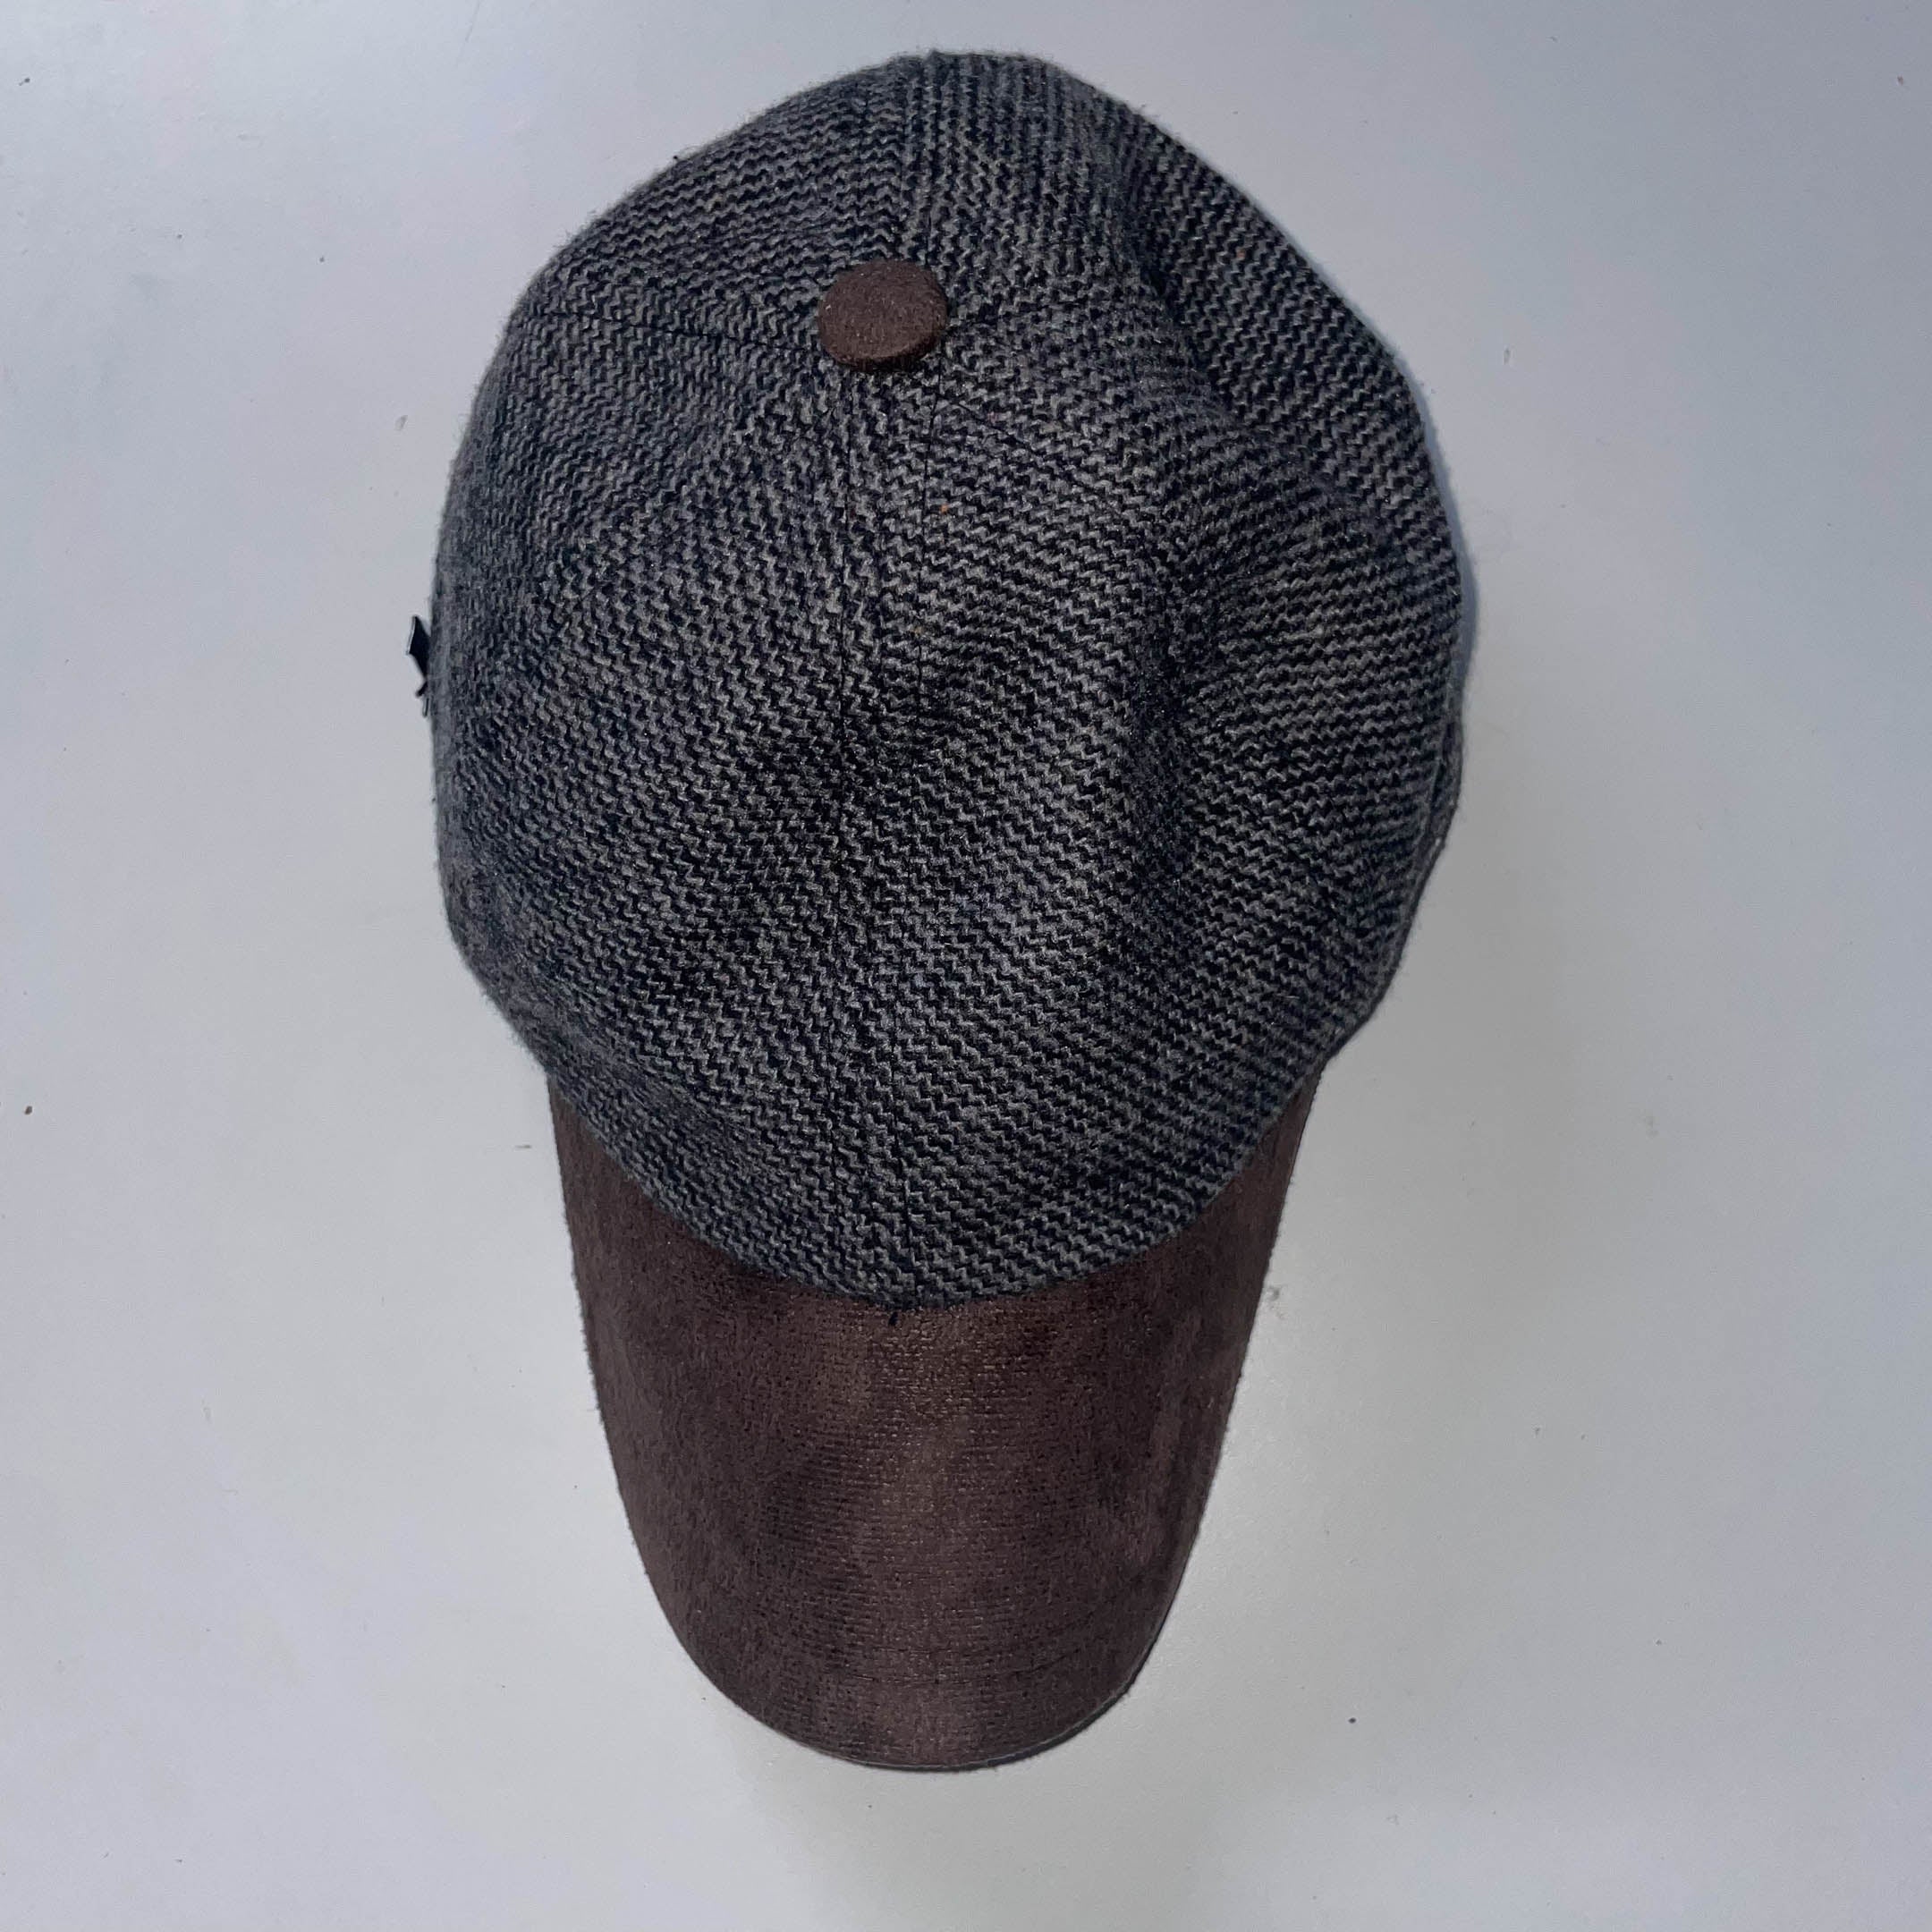 Vintage scottish grey and brown baseball cap